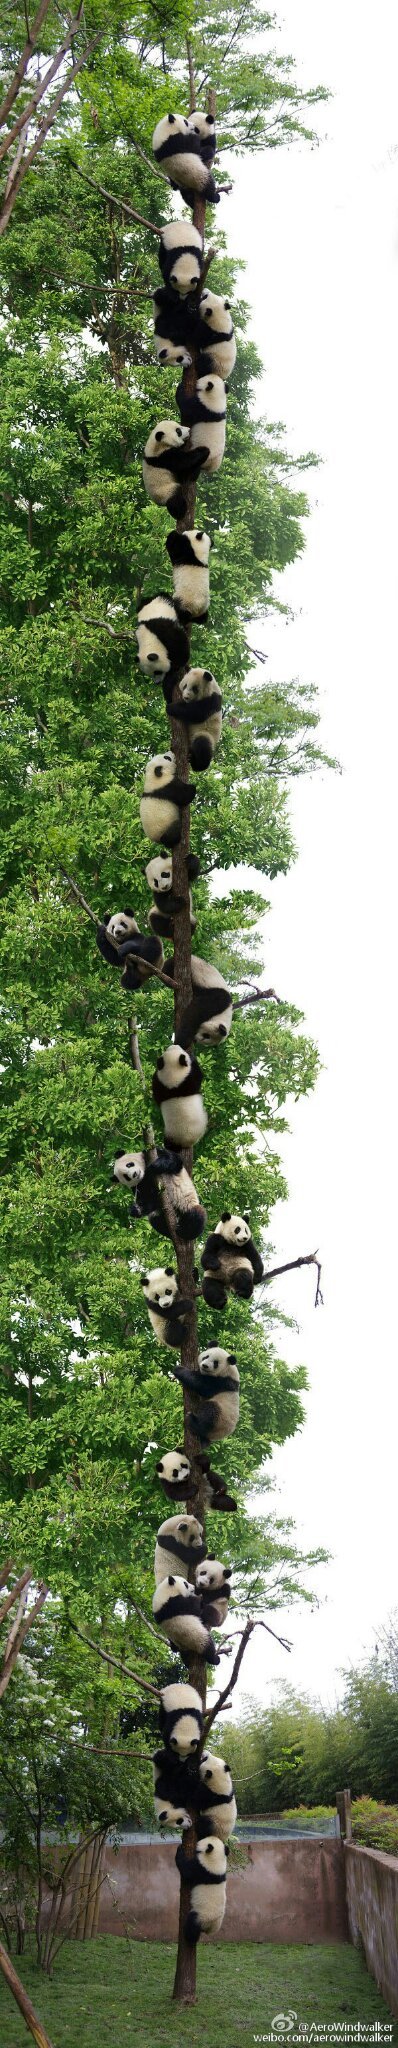 It's a panda tree - meme